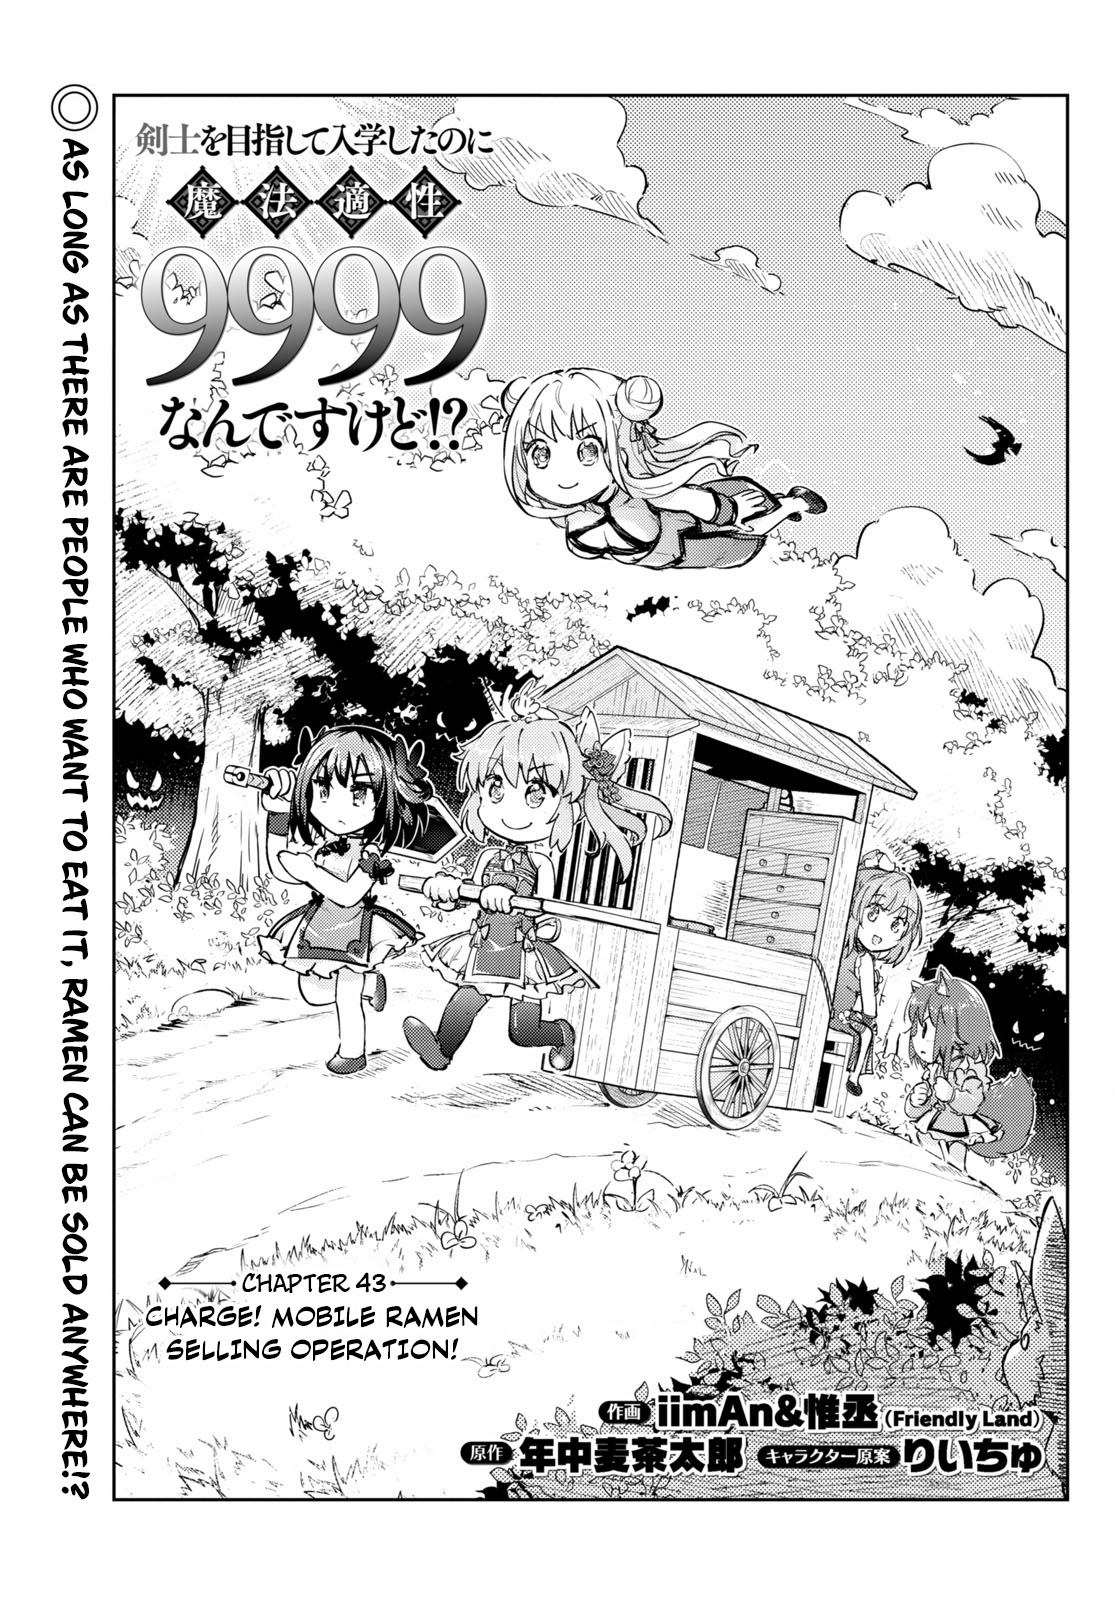 Kenshi O Mezashite Nyugaku Shitanoni Maho Tekisei 9999 Nandesukedo!? Chapter 43: Charge! Mobile Ramen Selling Operation! - Picture 1